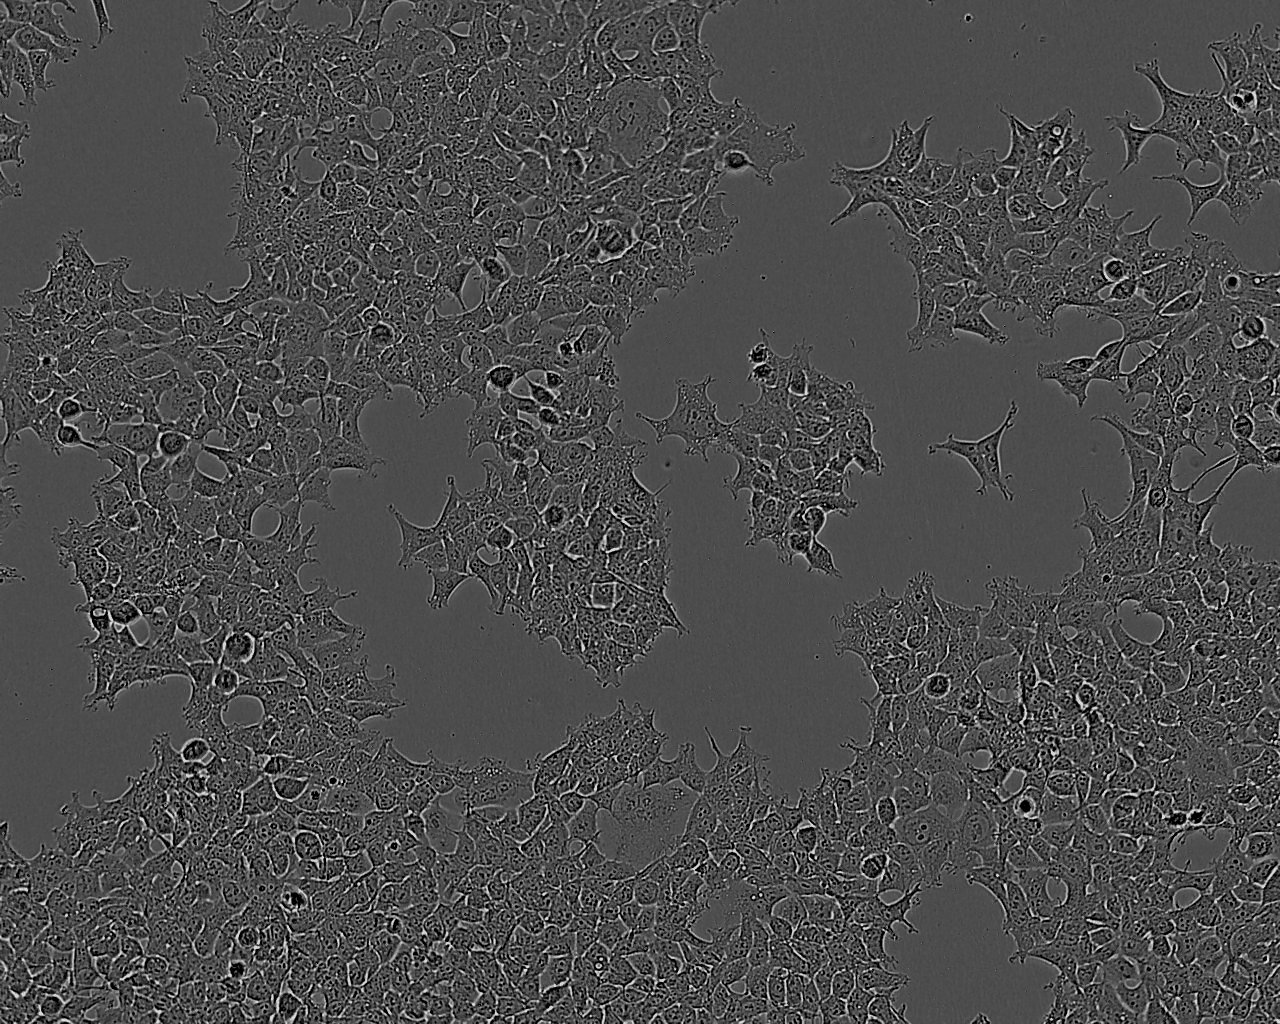 HCC94 Cell:人子宫鳞癌细胞系,HCC94 Cell